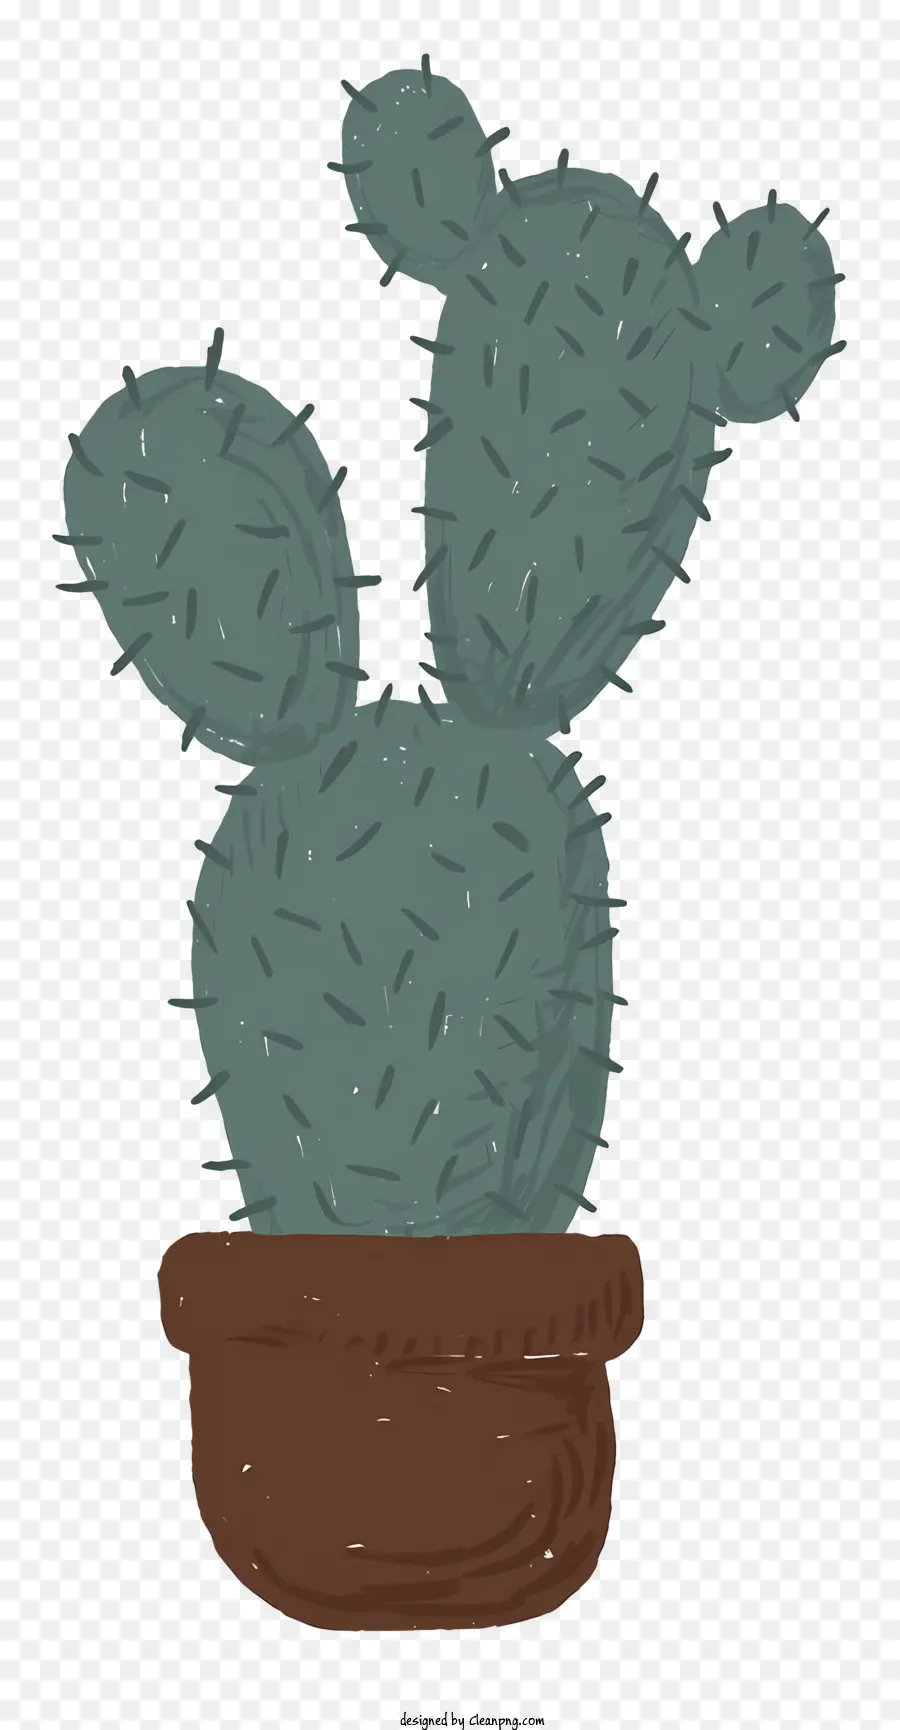 grünes Blatt - Kaktus im Topf mit Stacheln, braune Färbung